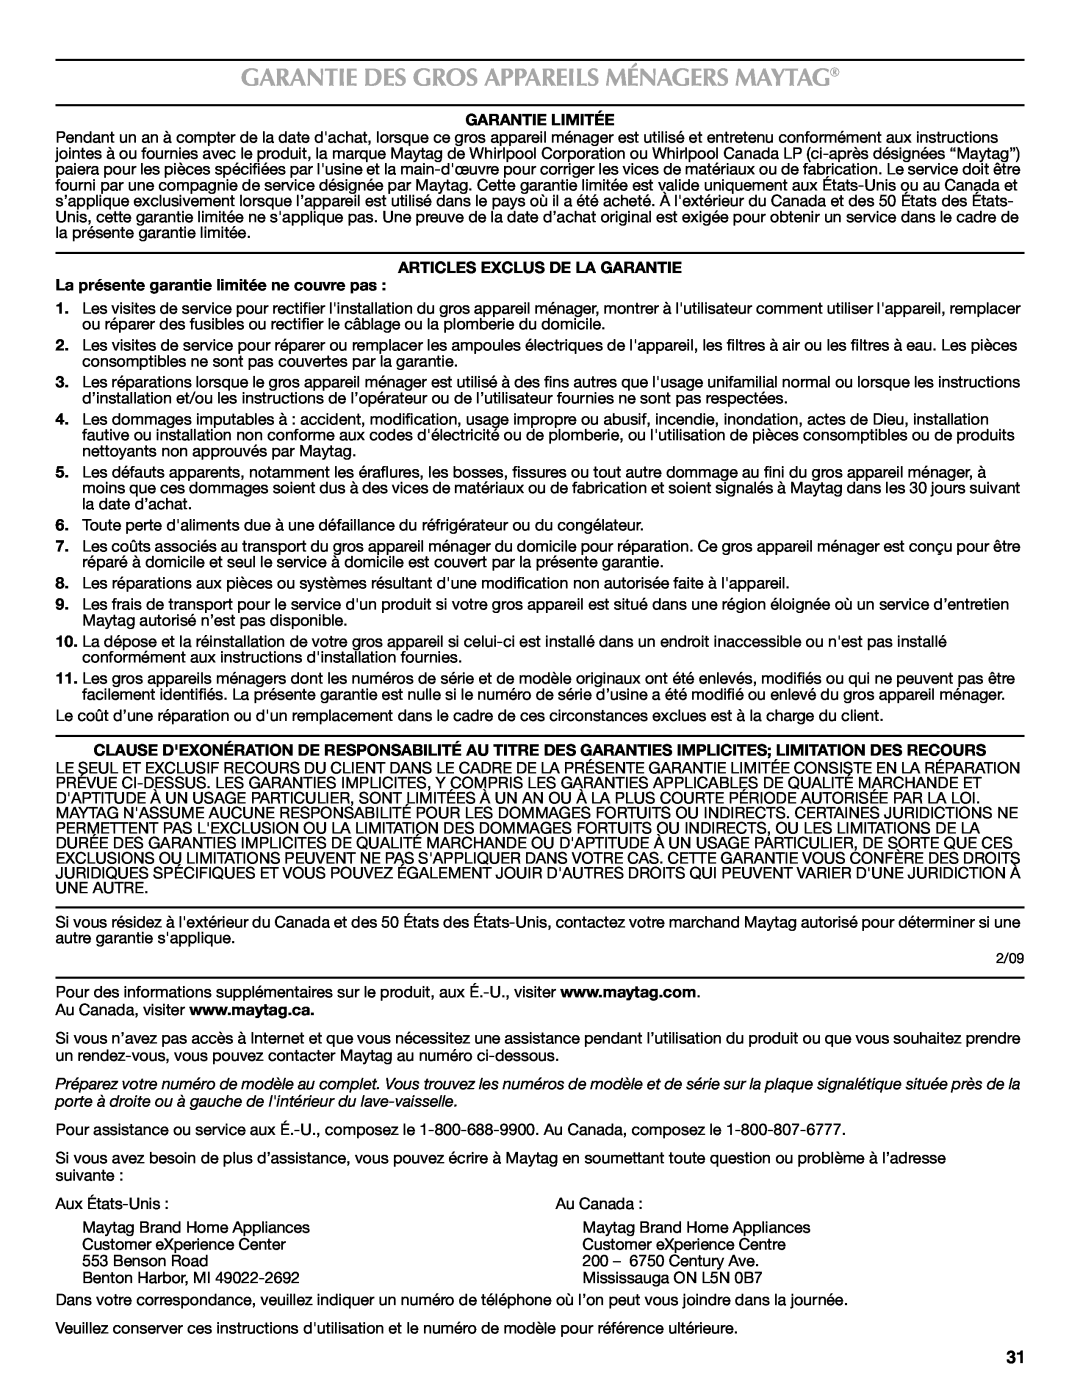 Maytag W10438305A warranty Garantie Des Gros Appareils Ménagers Maytag, Garantie Limitée, Articles Exclus De La Garantie 